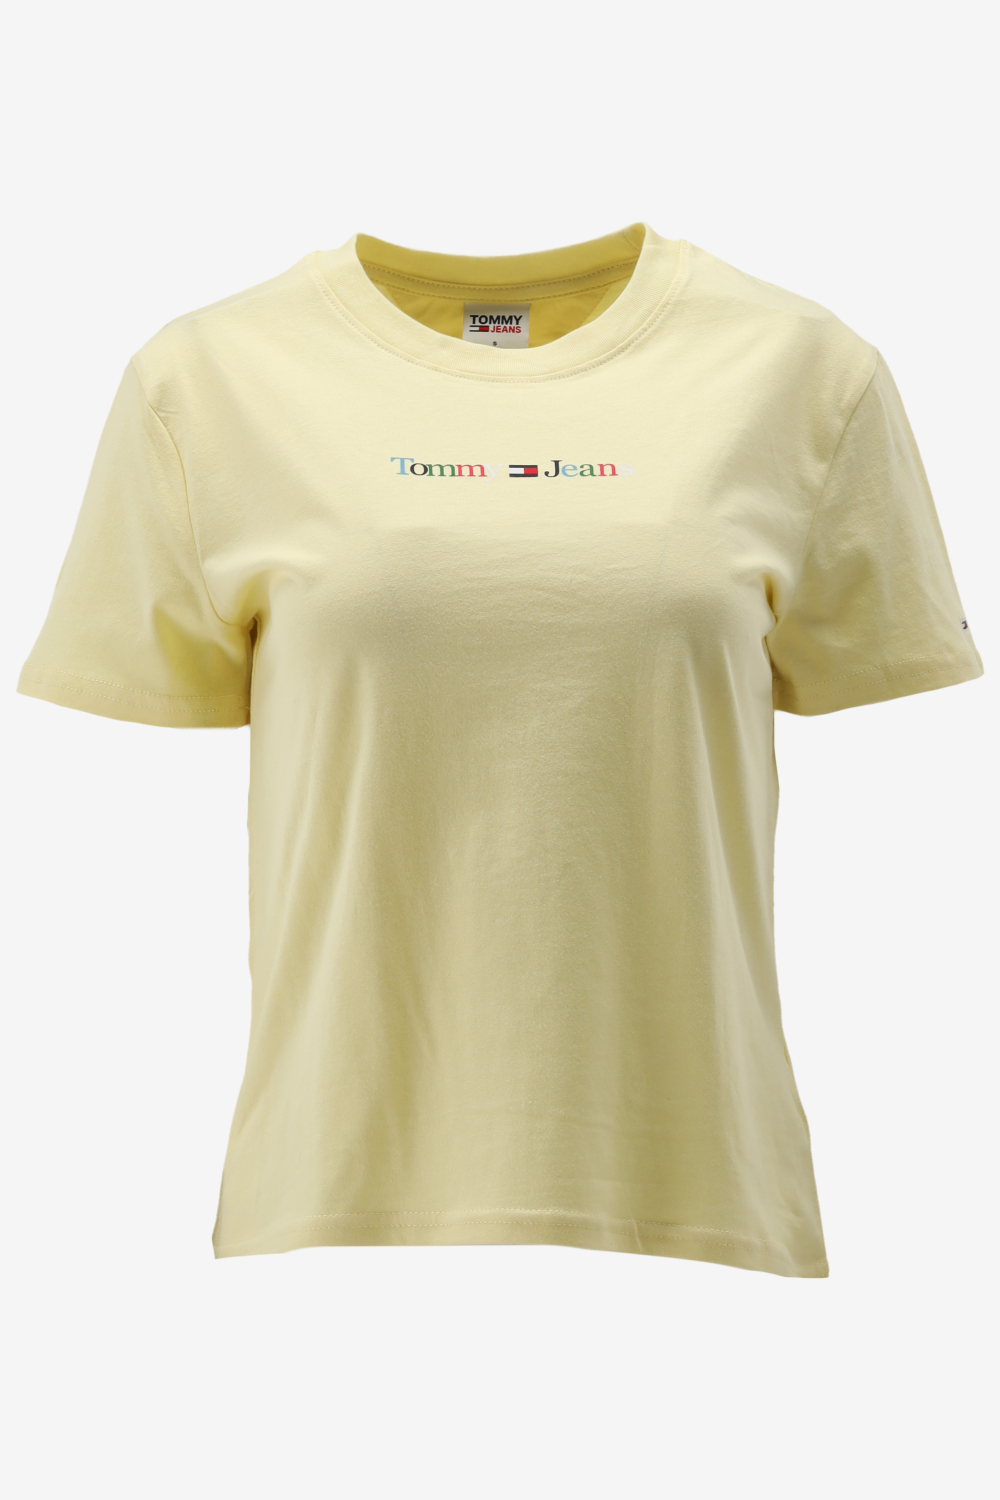 Tommy Hilfiger T shirt